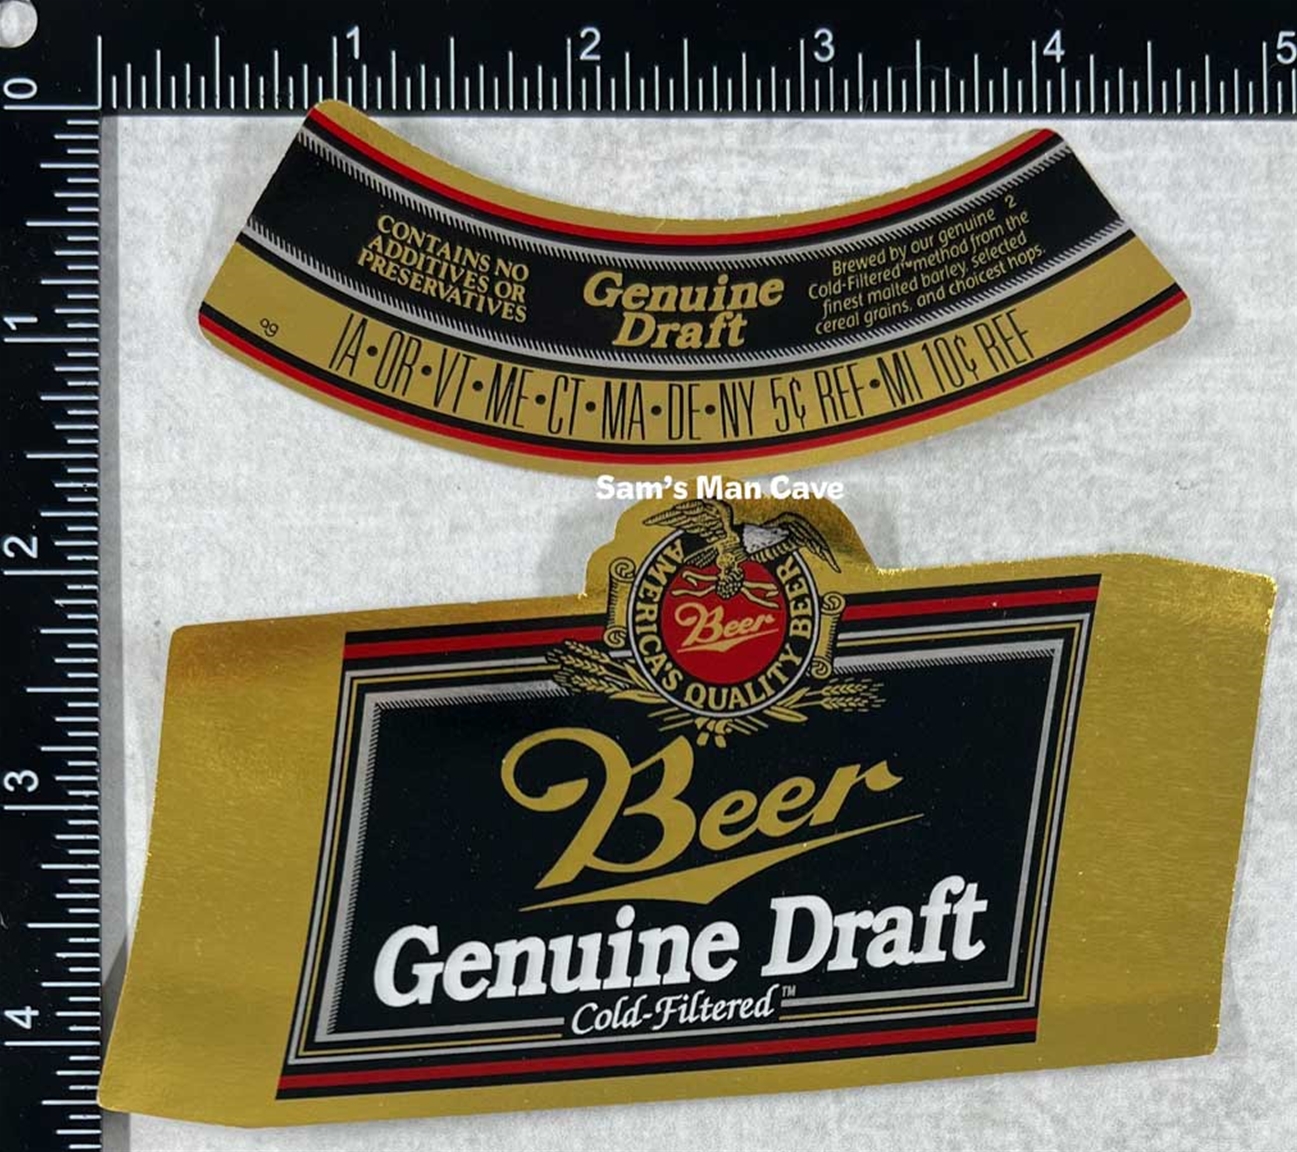 Miller Genuine Draft BEER Label with neck